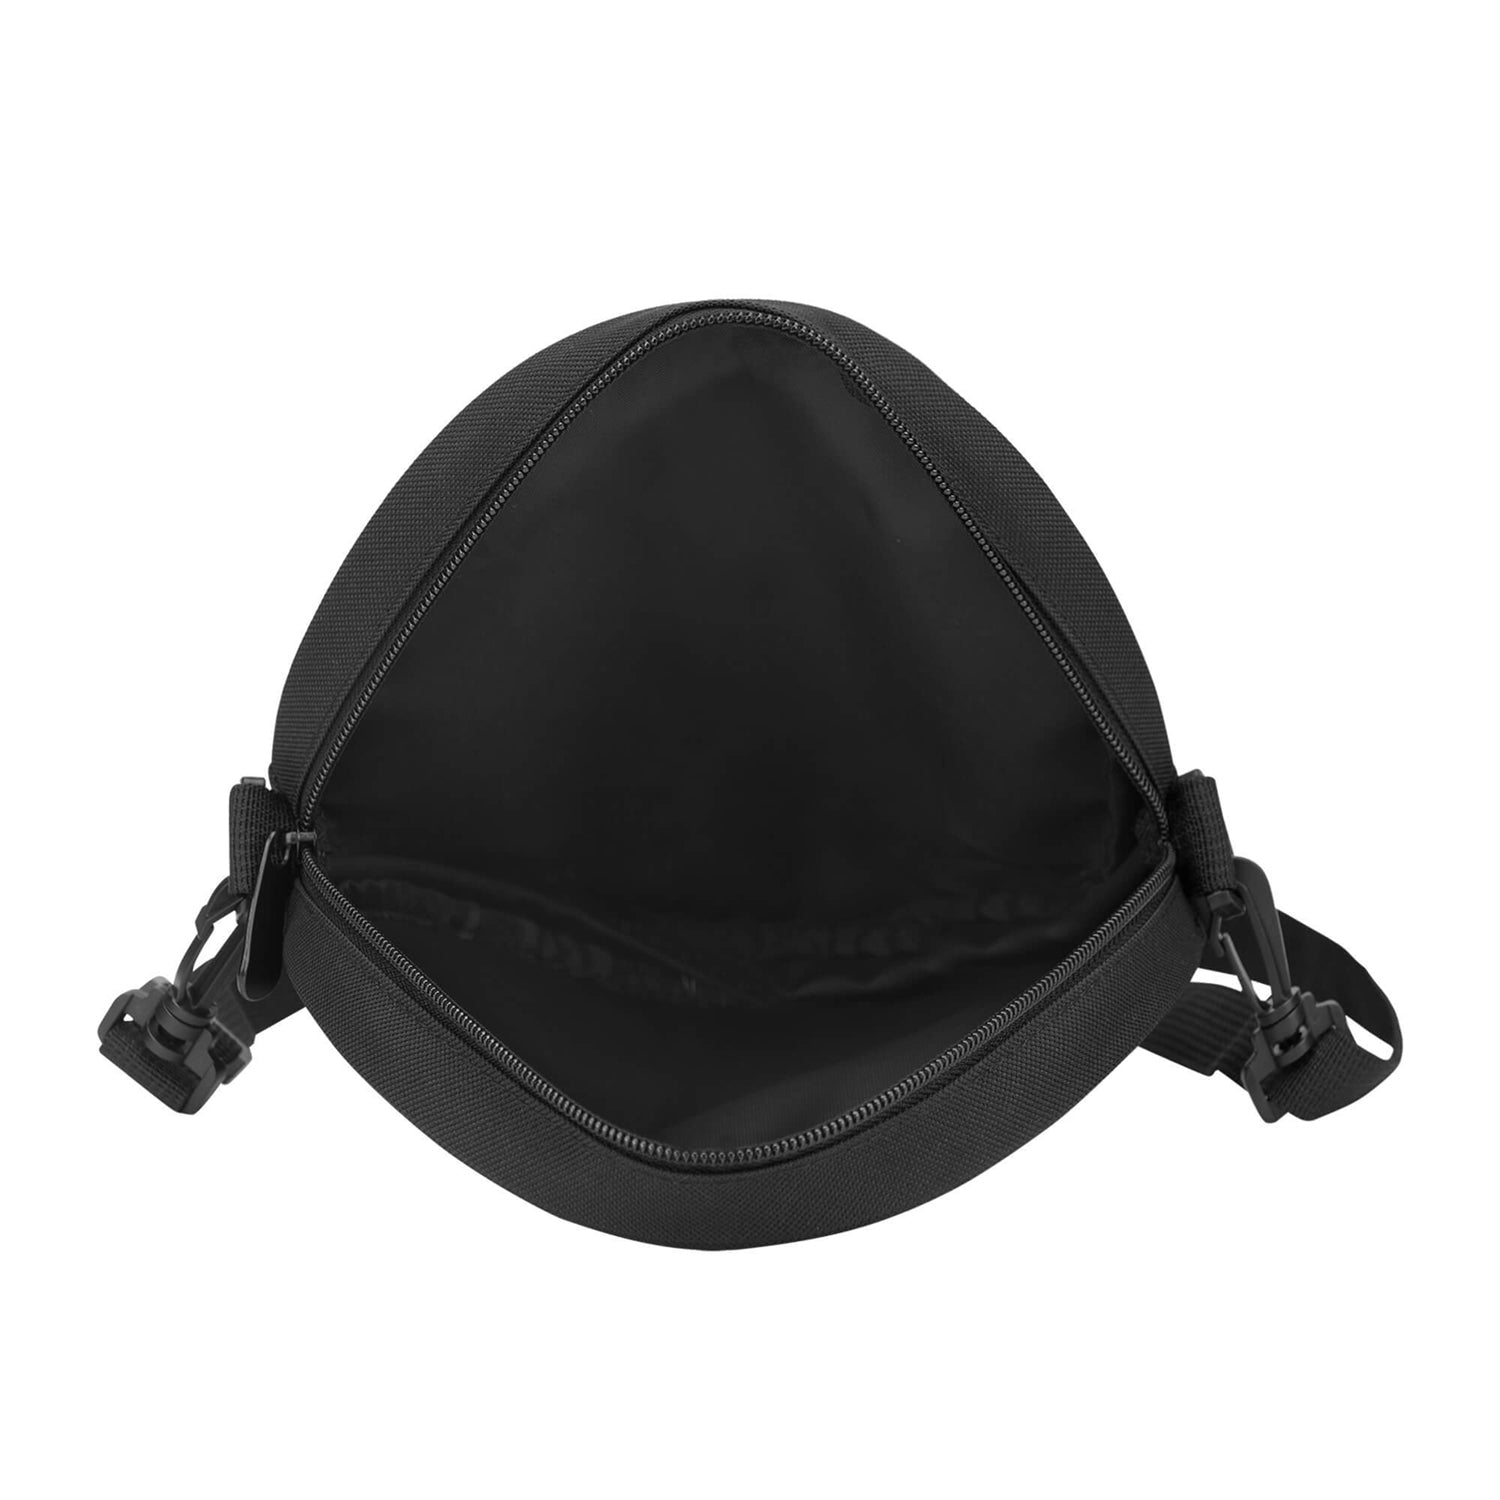 thomson-tartan-round-satchel-bags